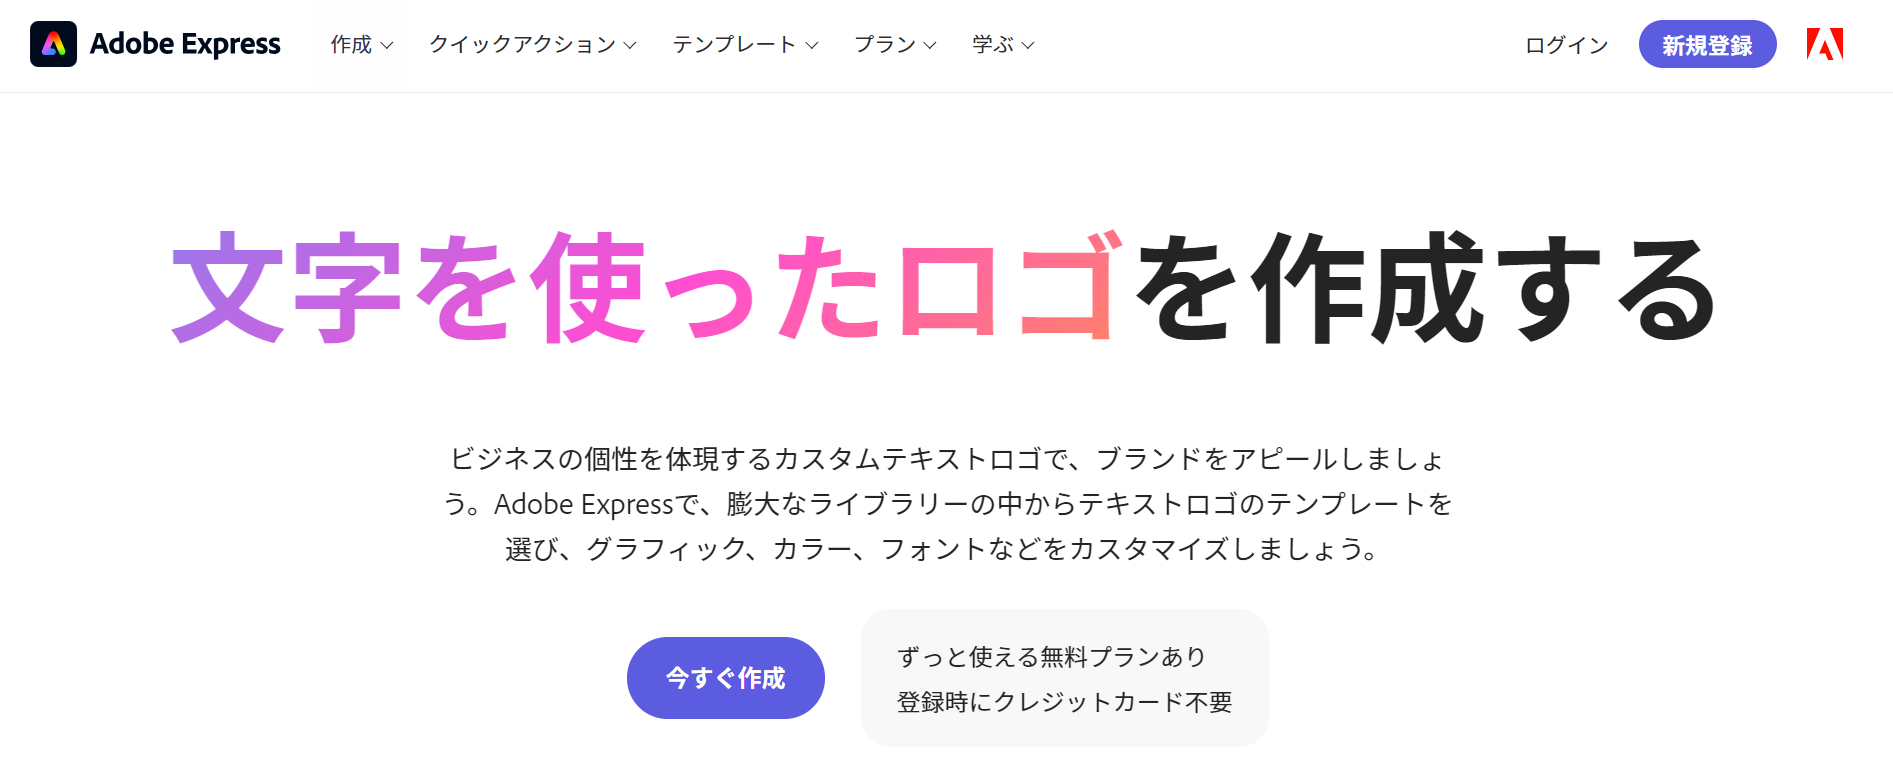 Adobe Expressのロゴ作成紹介ページ